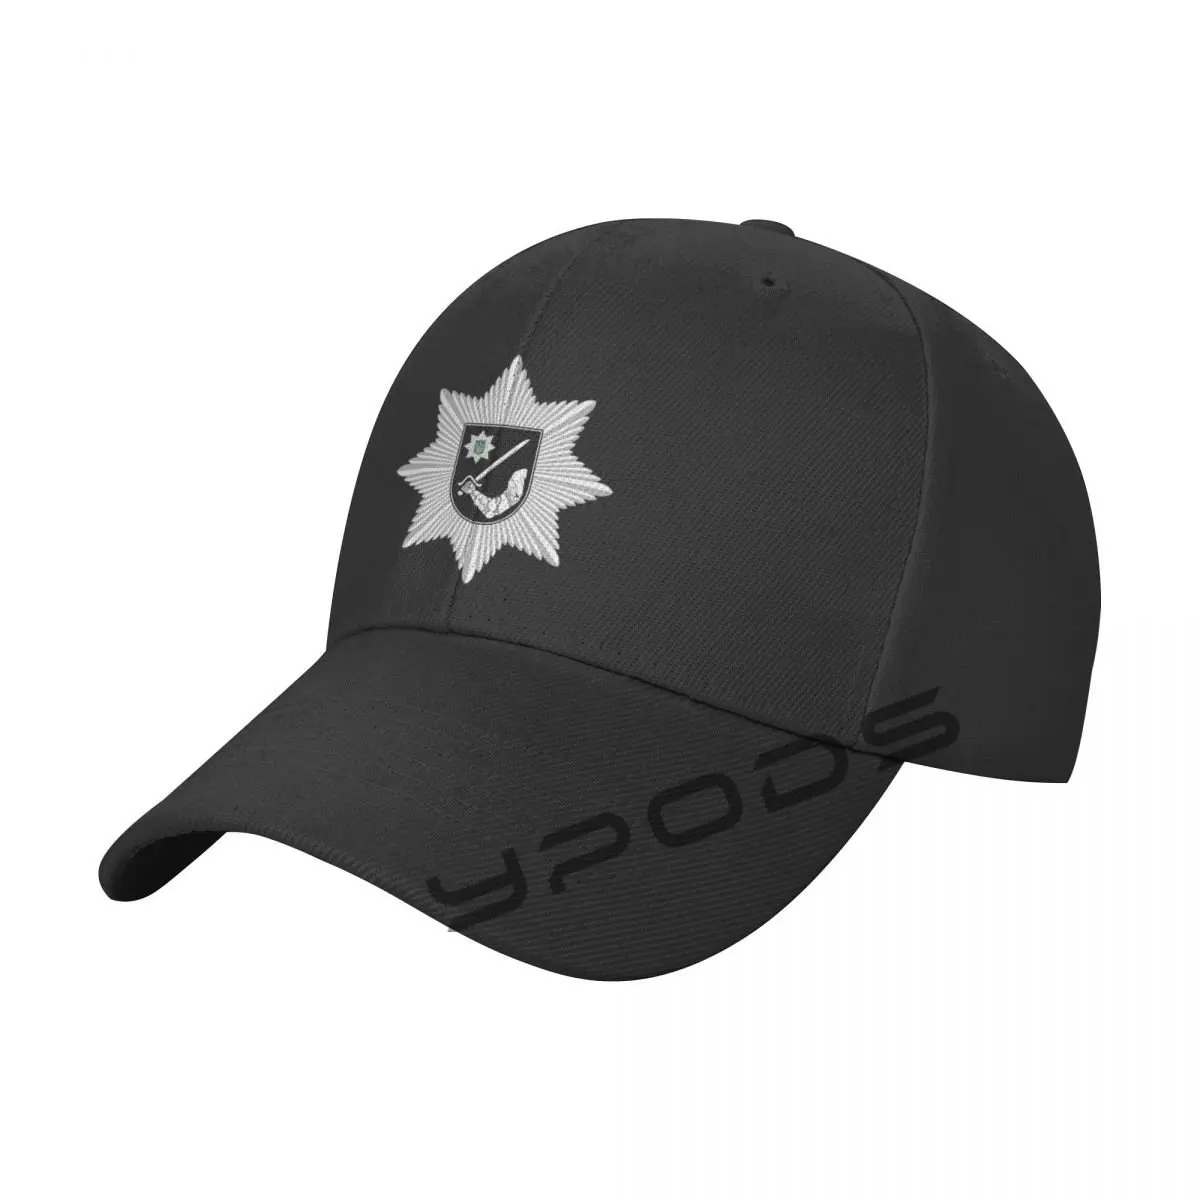 

Kisspng National Police Of Ukraine Chevron President Of Uk Emblem Baseball Cap Snapback Caps Casquette Hats For Men Women